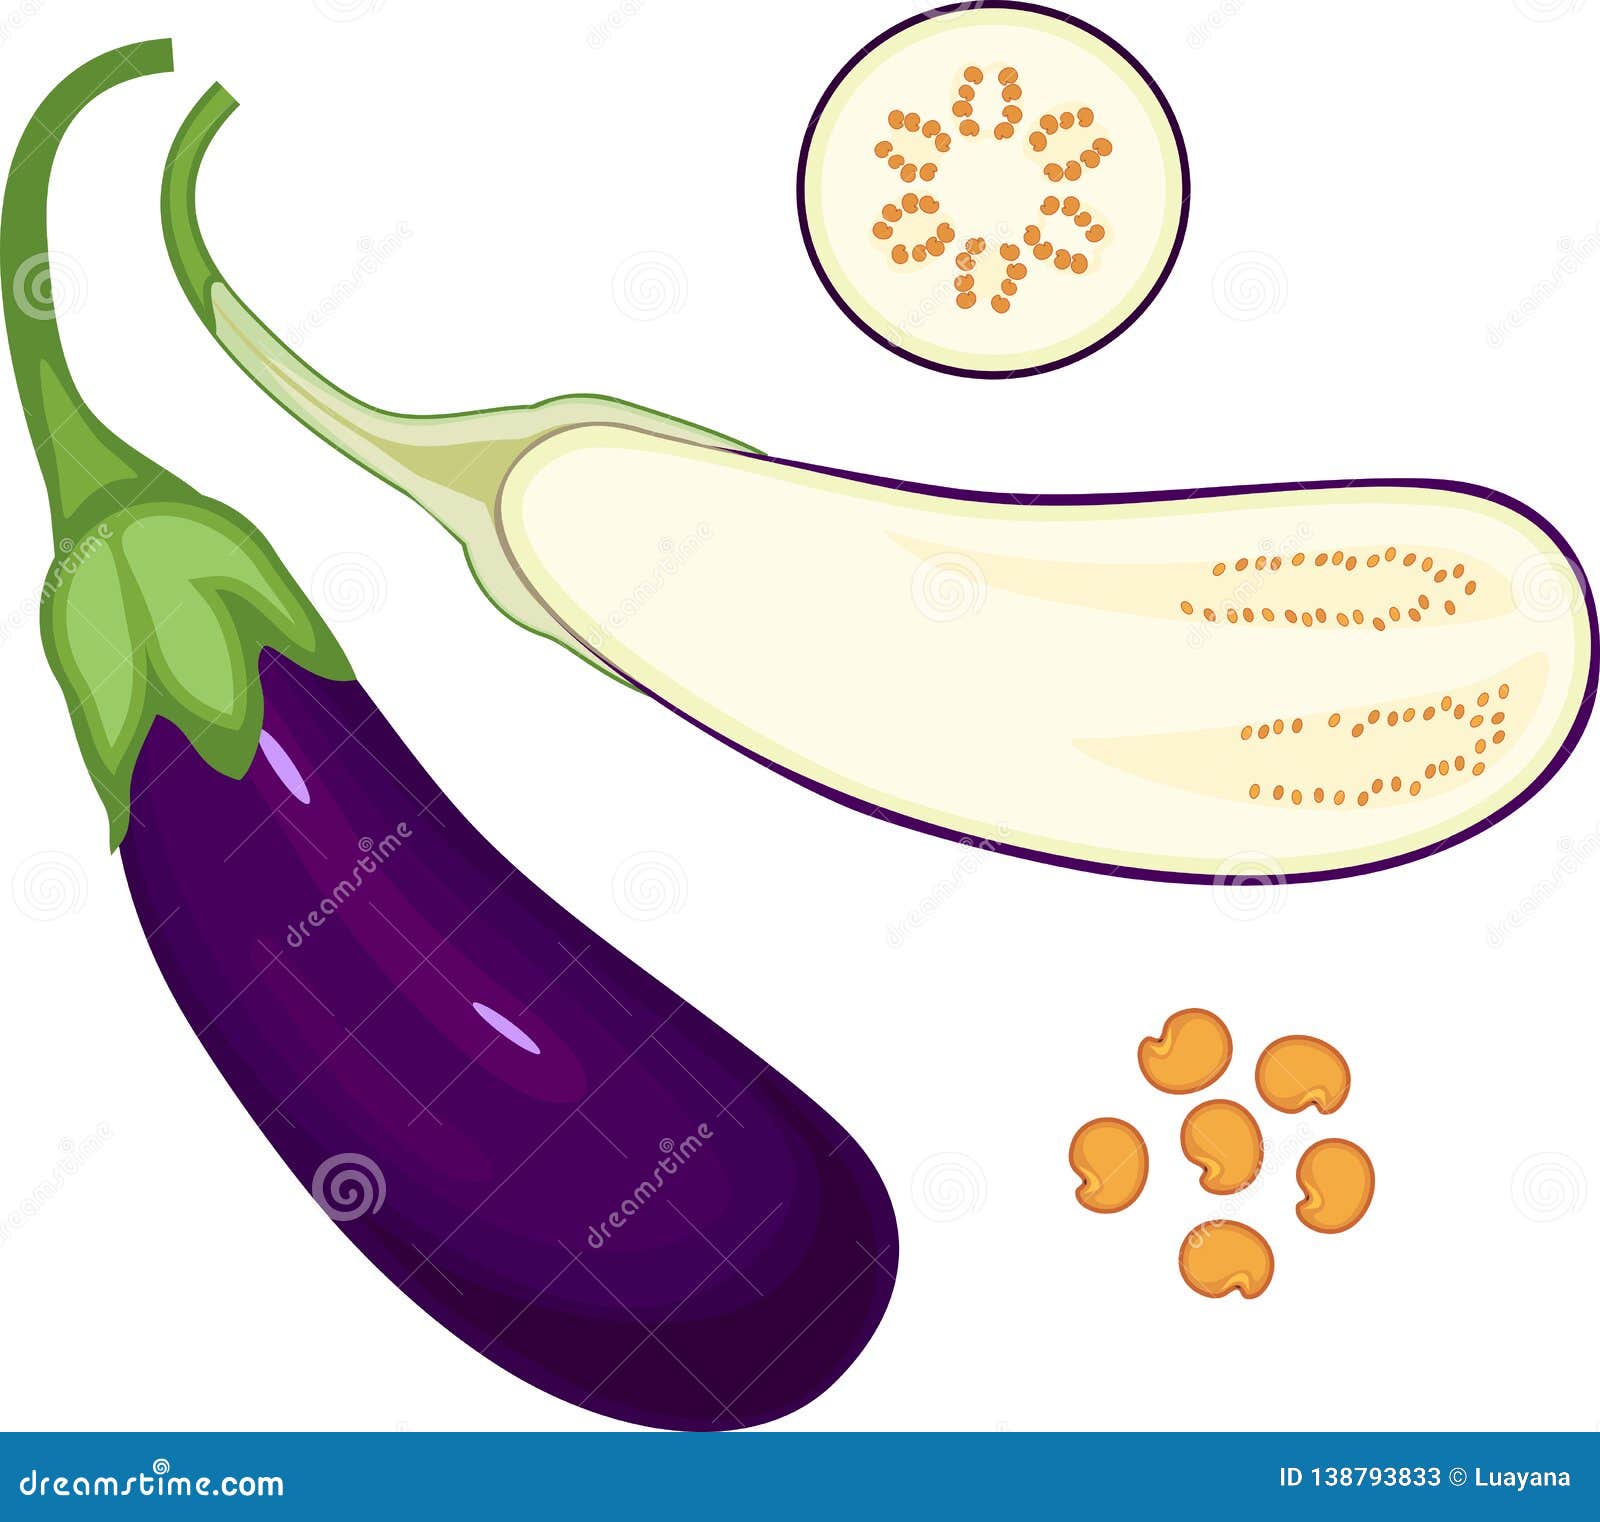 ripe purple eggplant. longitudinal and cross-section